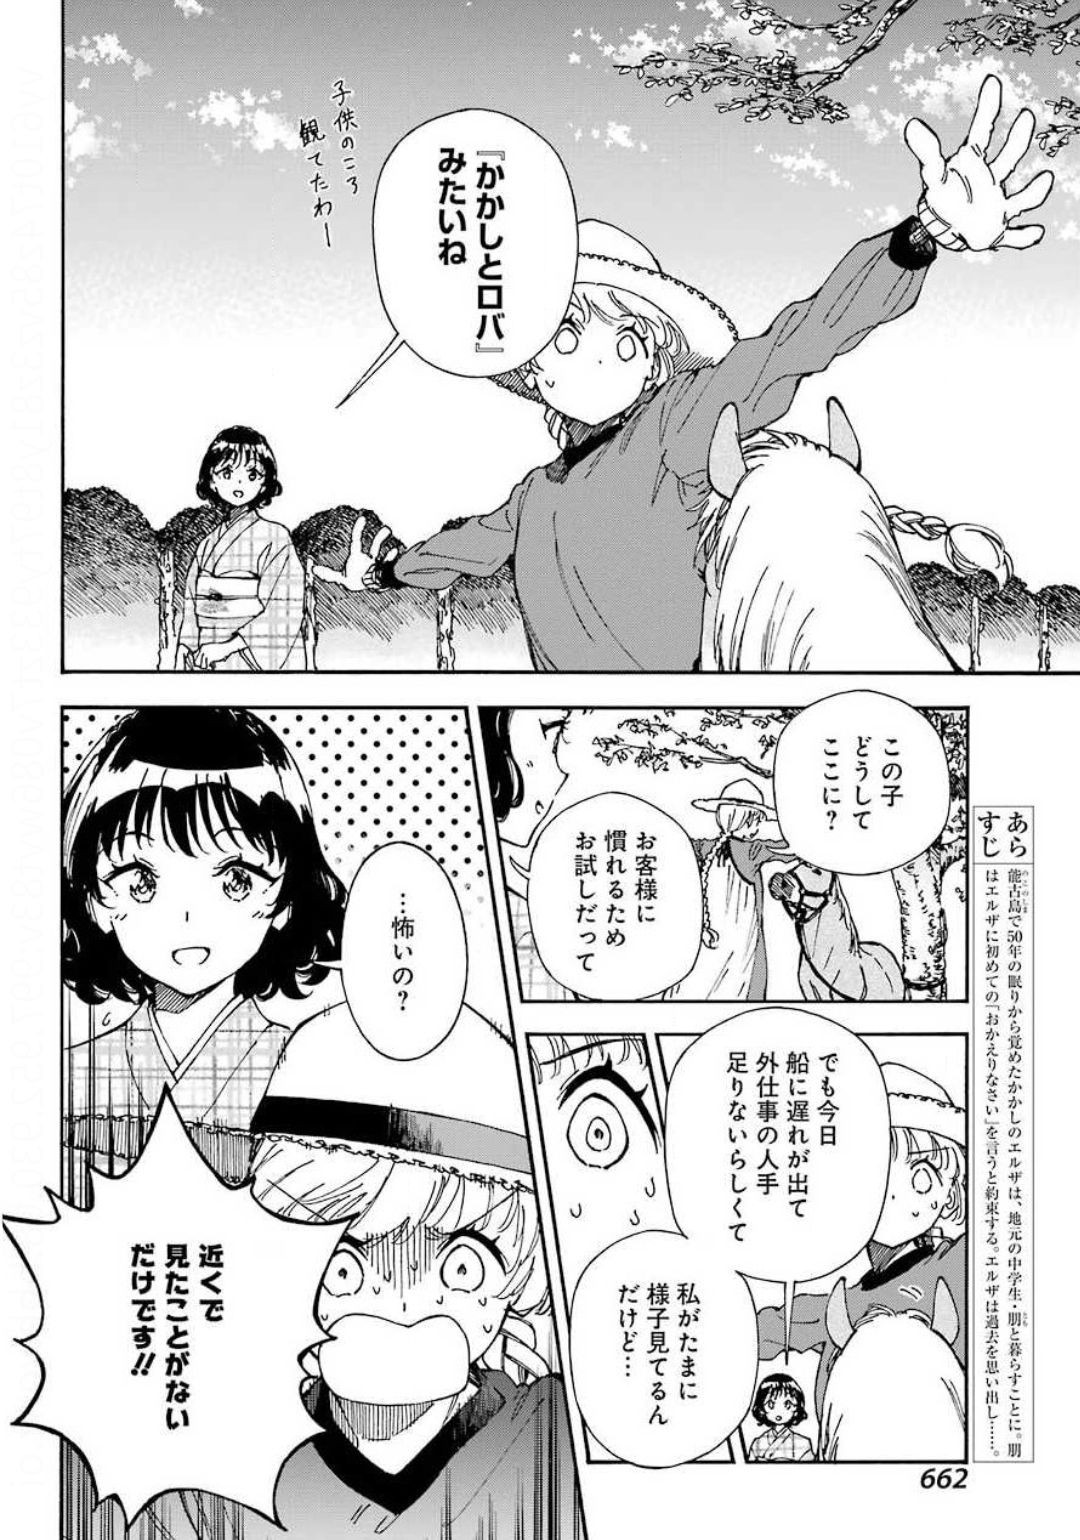 Hotomeku-kakashi - Chapter 04-2 - Page 3